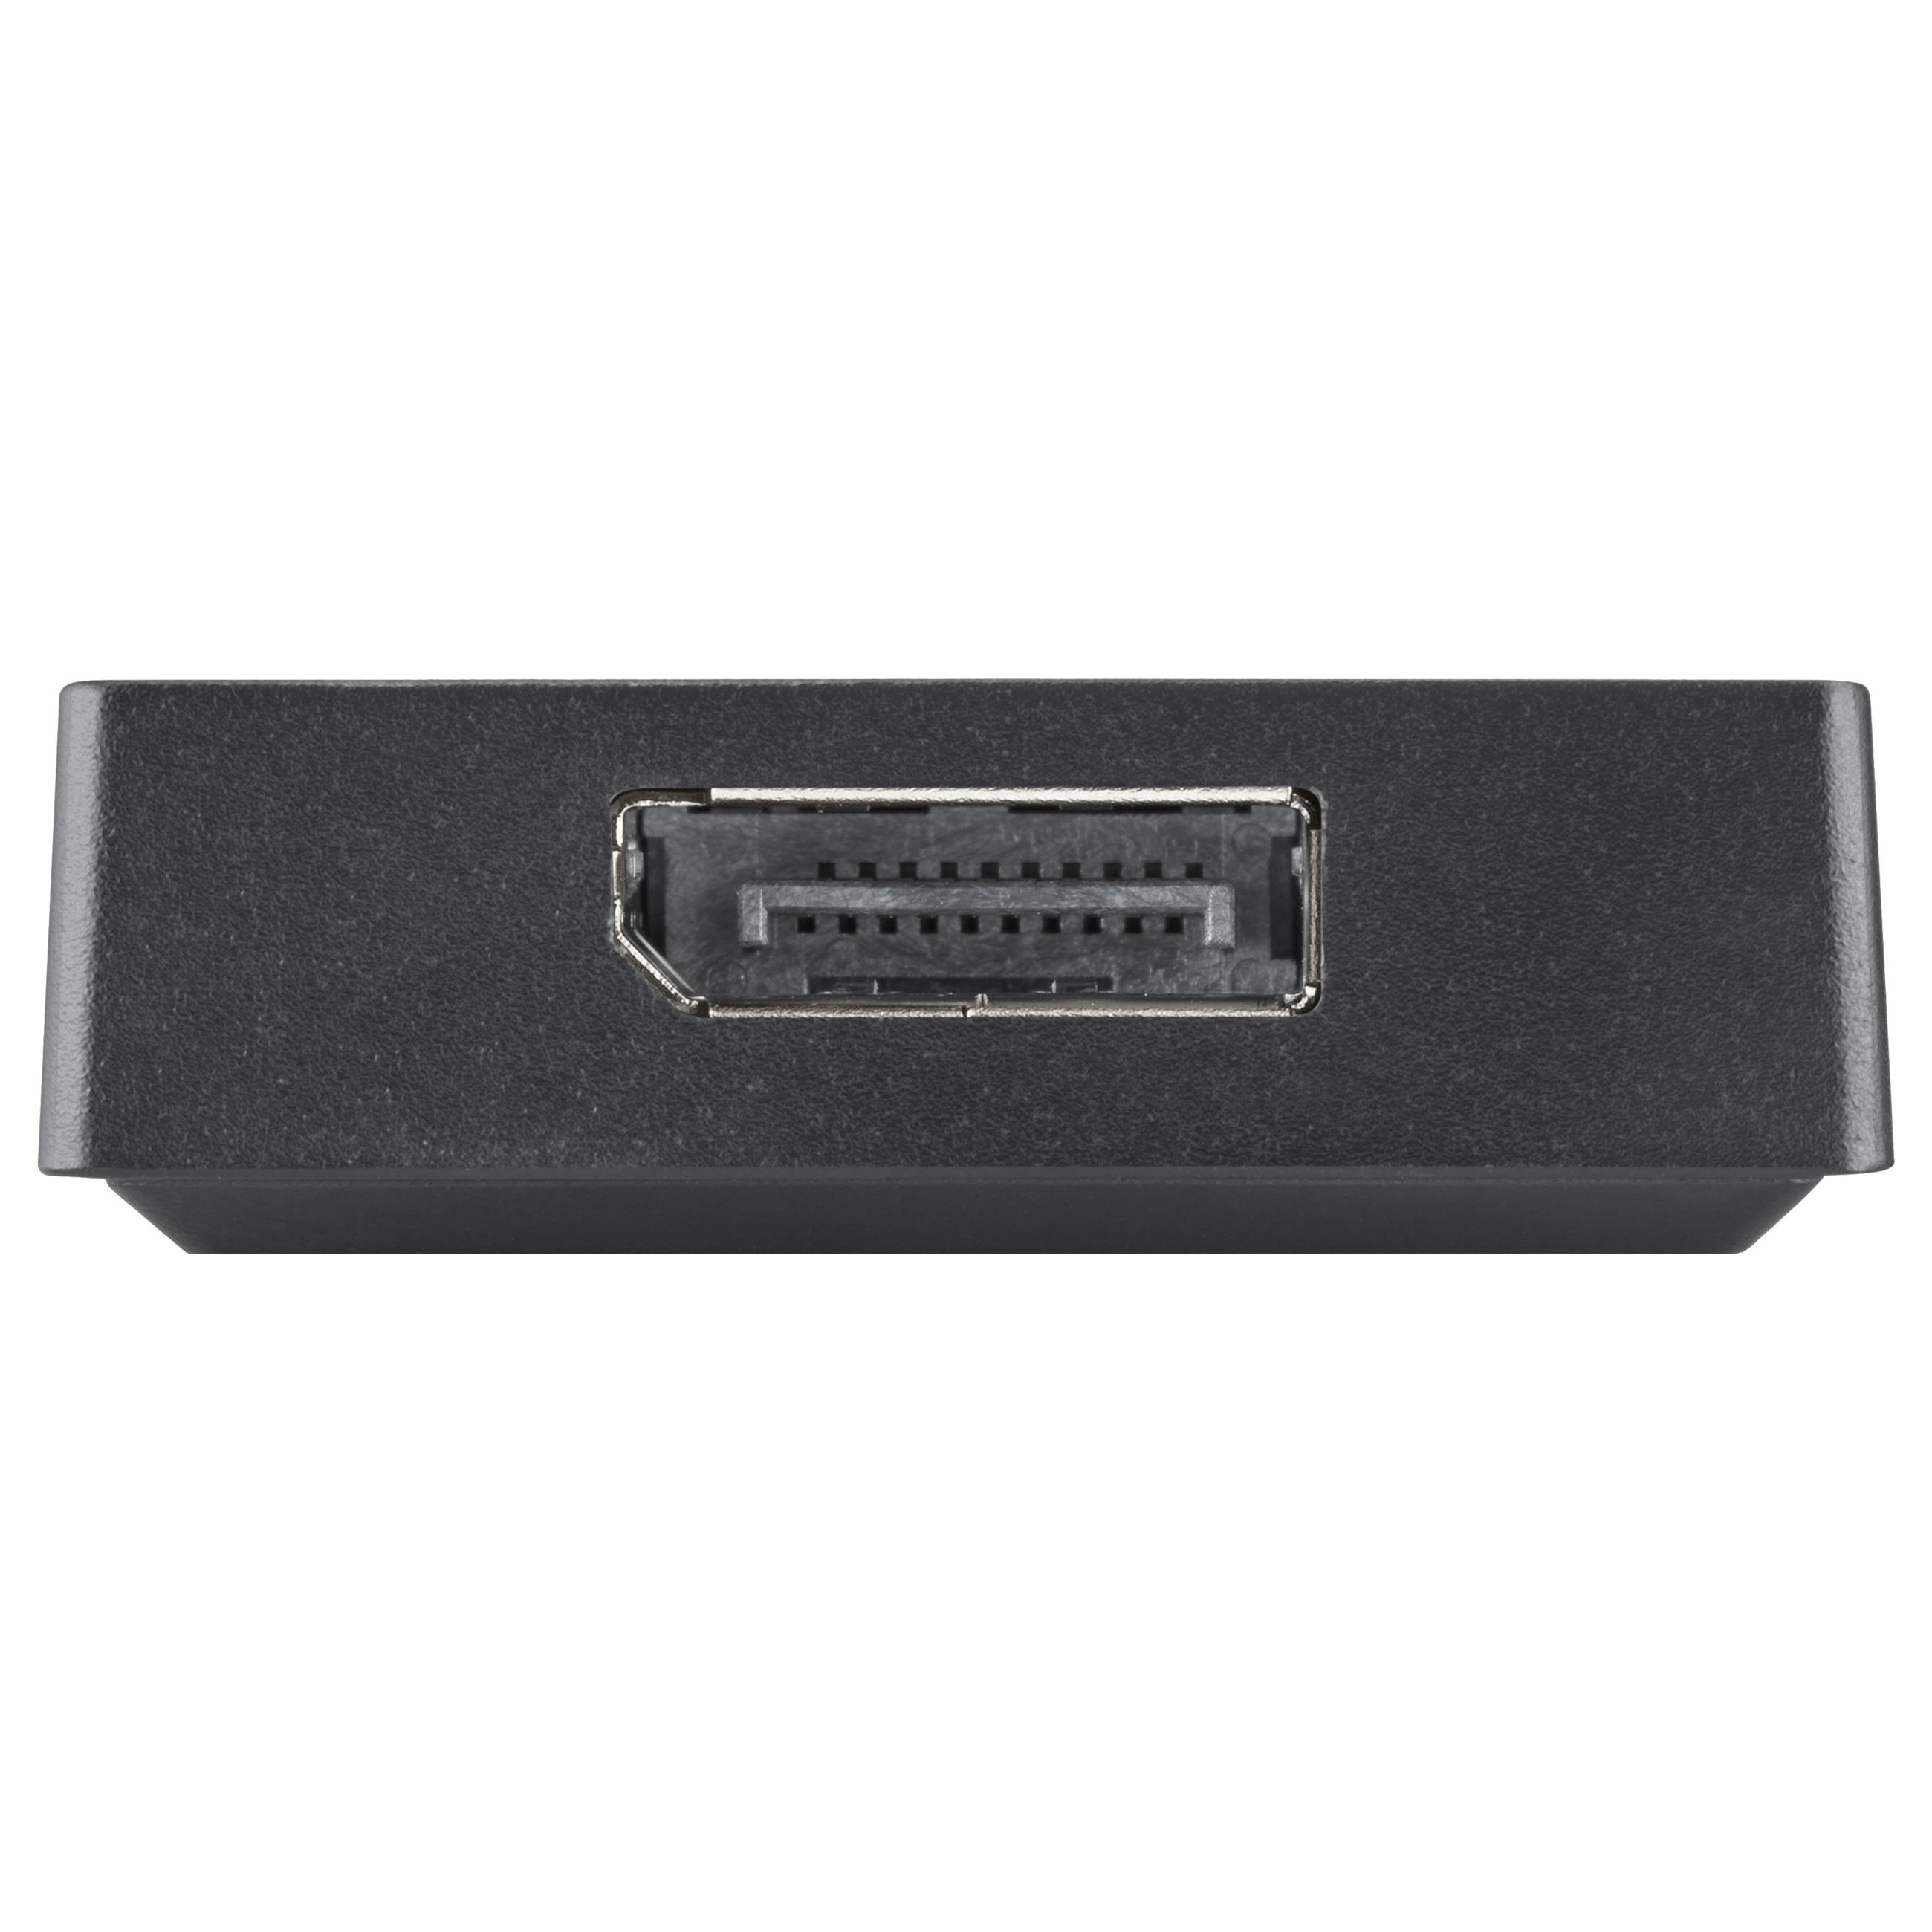 Fujitsu USB 3.0 auf DisplayPort - Video Adapter - Schwarz - Neu